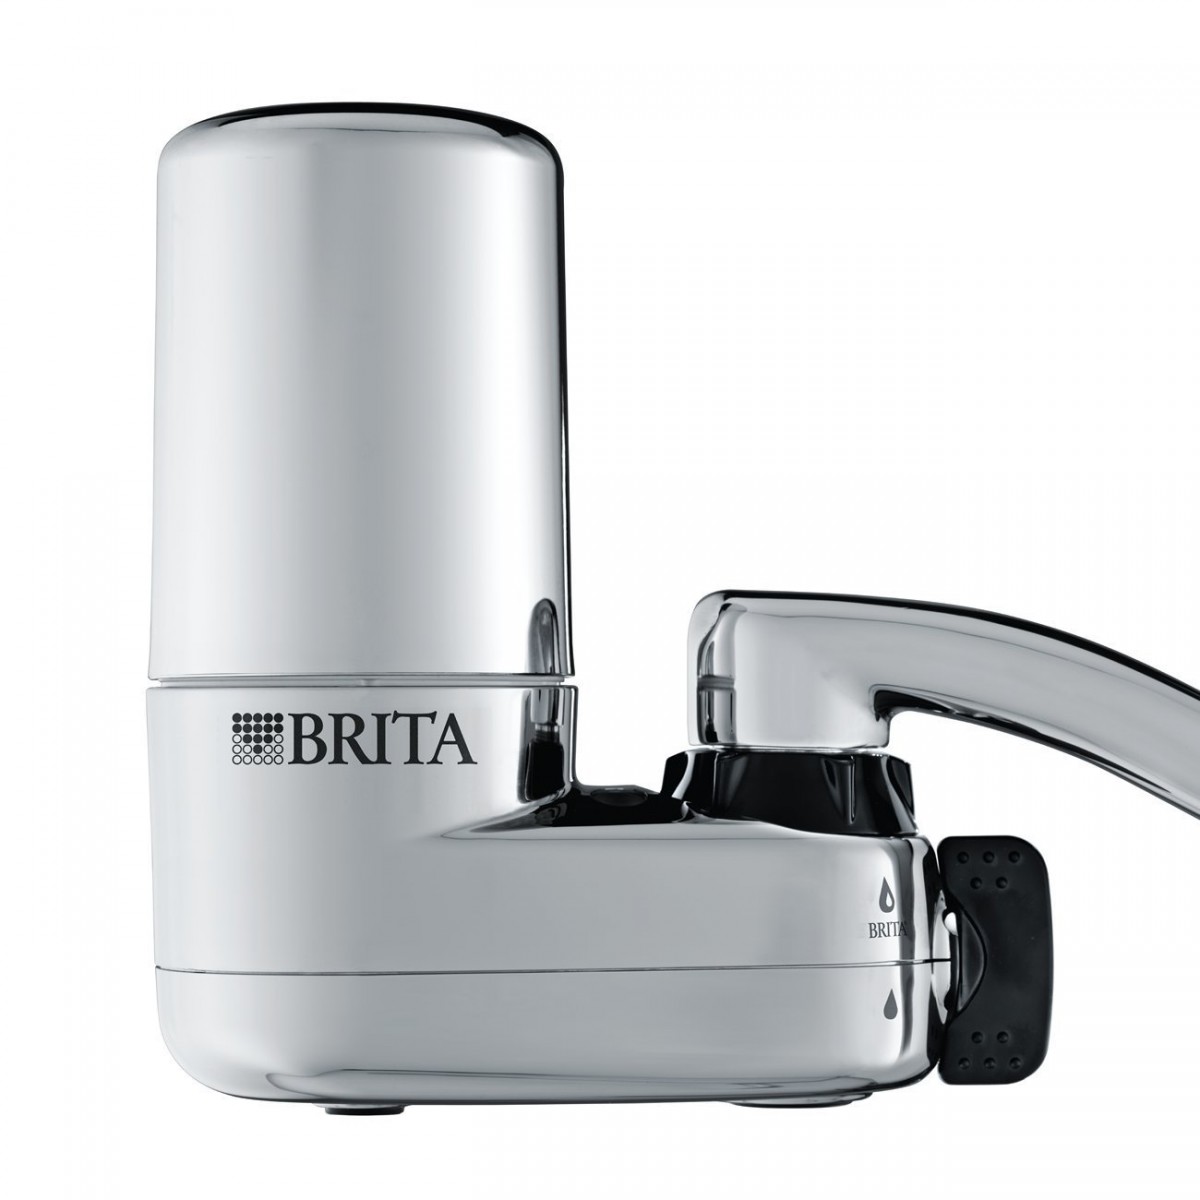 brita saff-100 water filter review